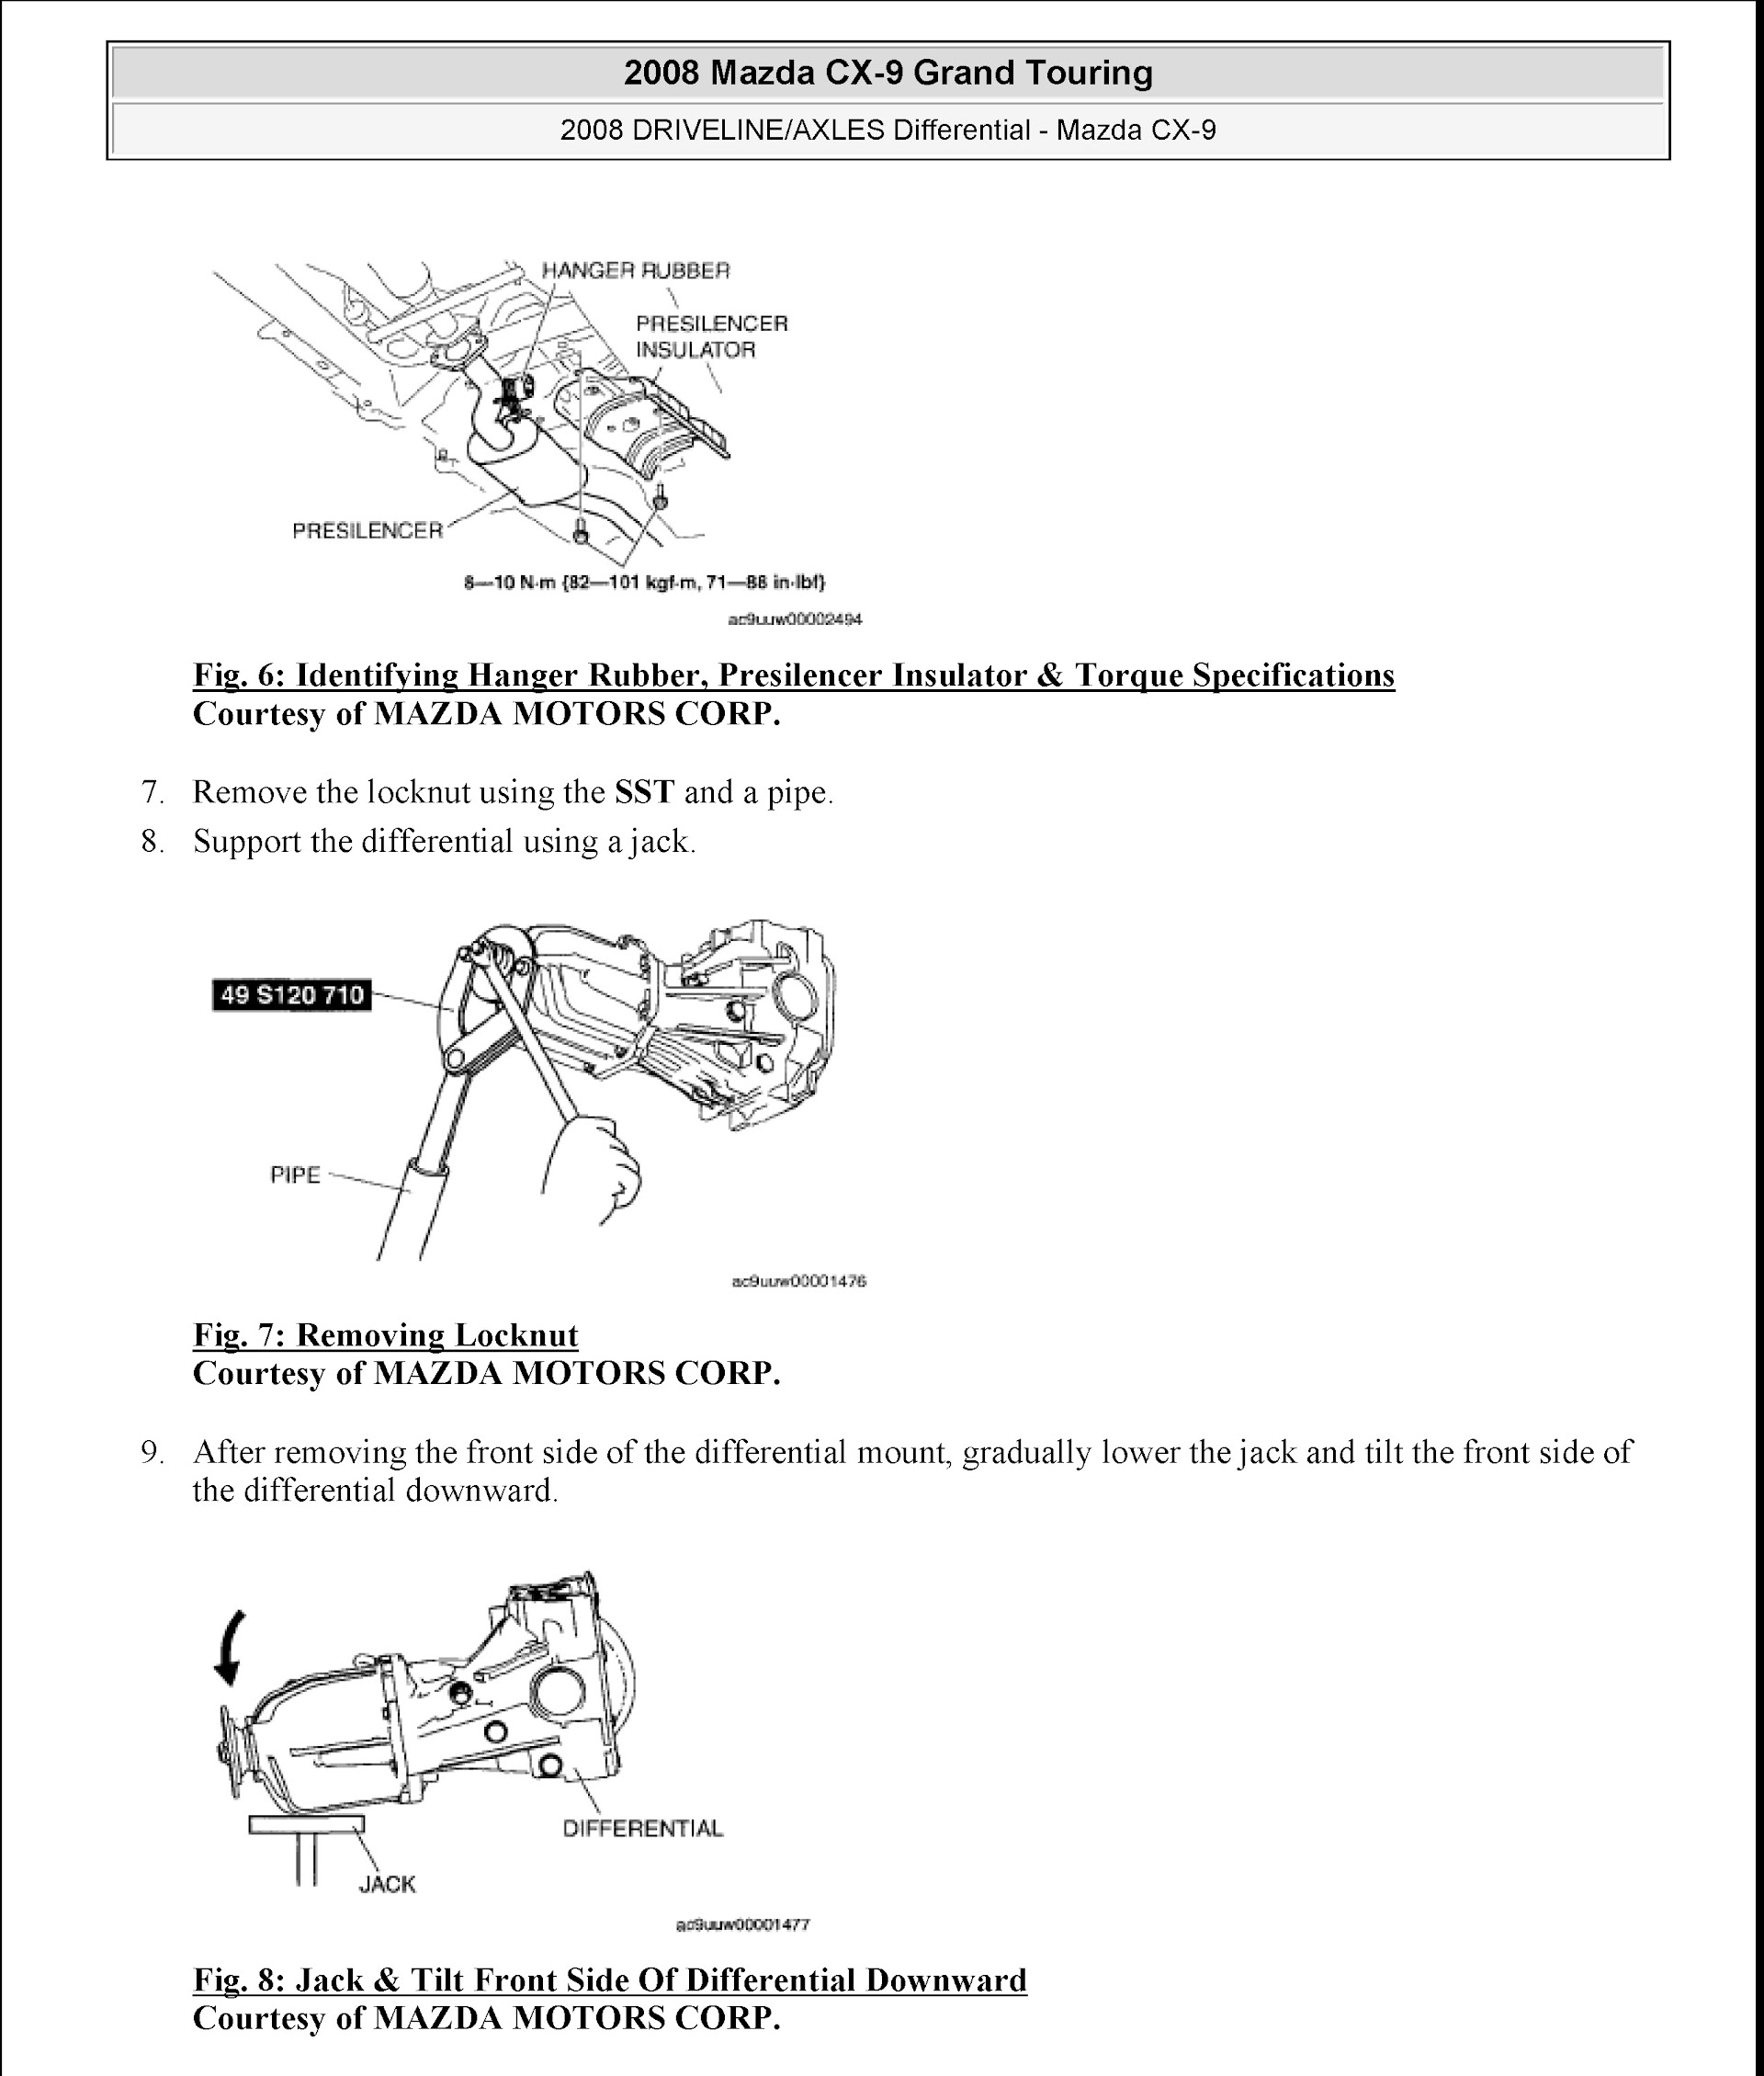 2008 Mazda CX-9 Repair Manual "Grand Touring", Driveline, Axles Differential